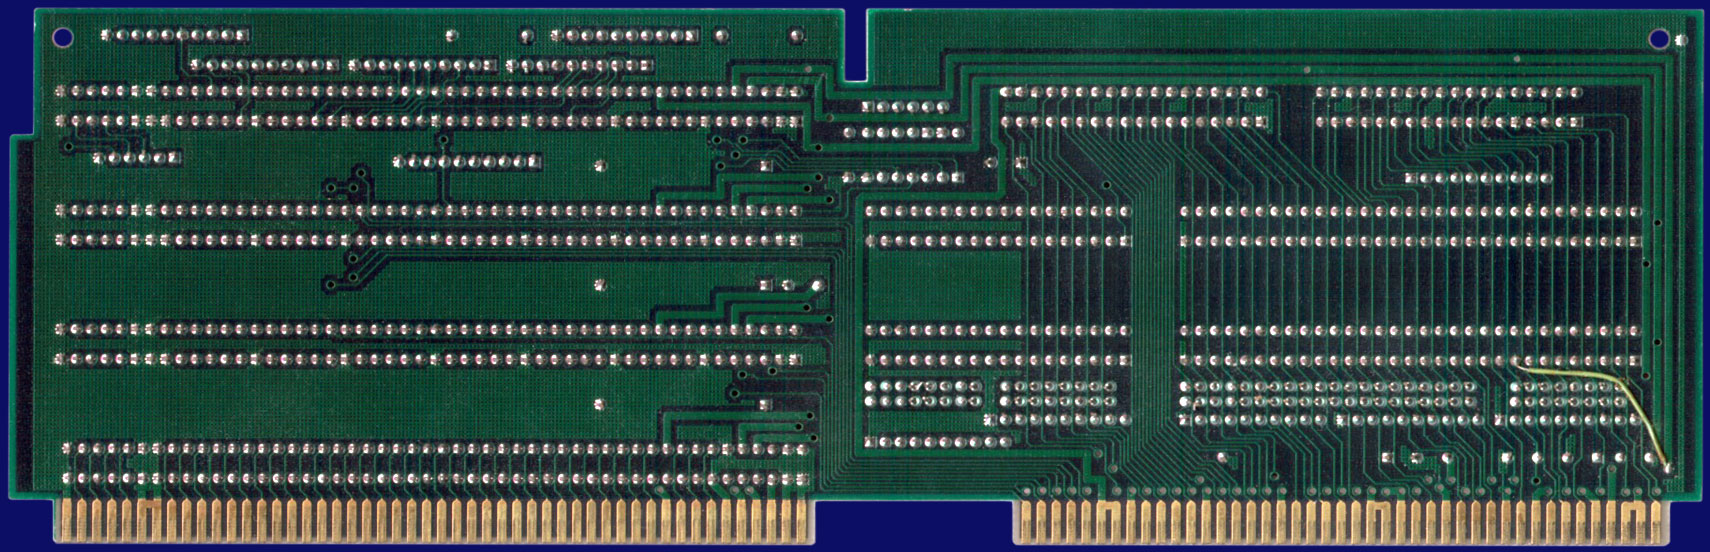 Commodore Amiga 3000 - Rev 6.3 motherboard, rev 6.1 daughter board, back side